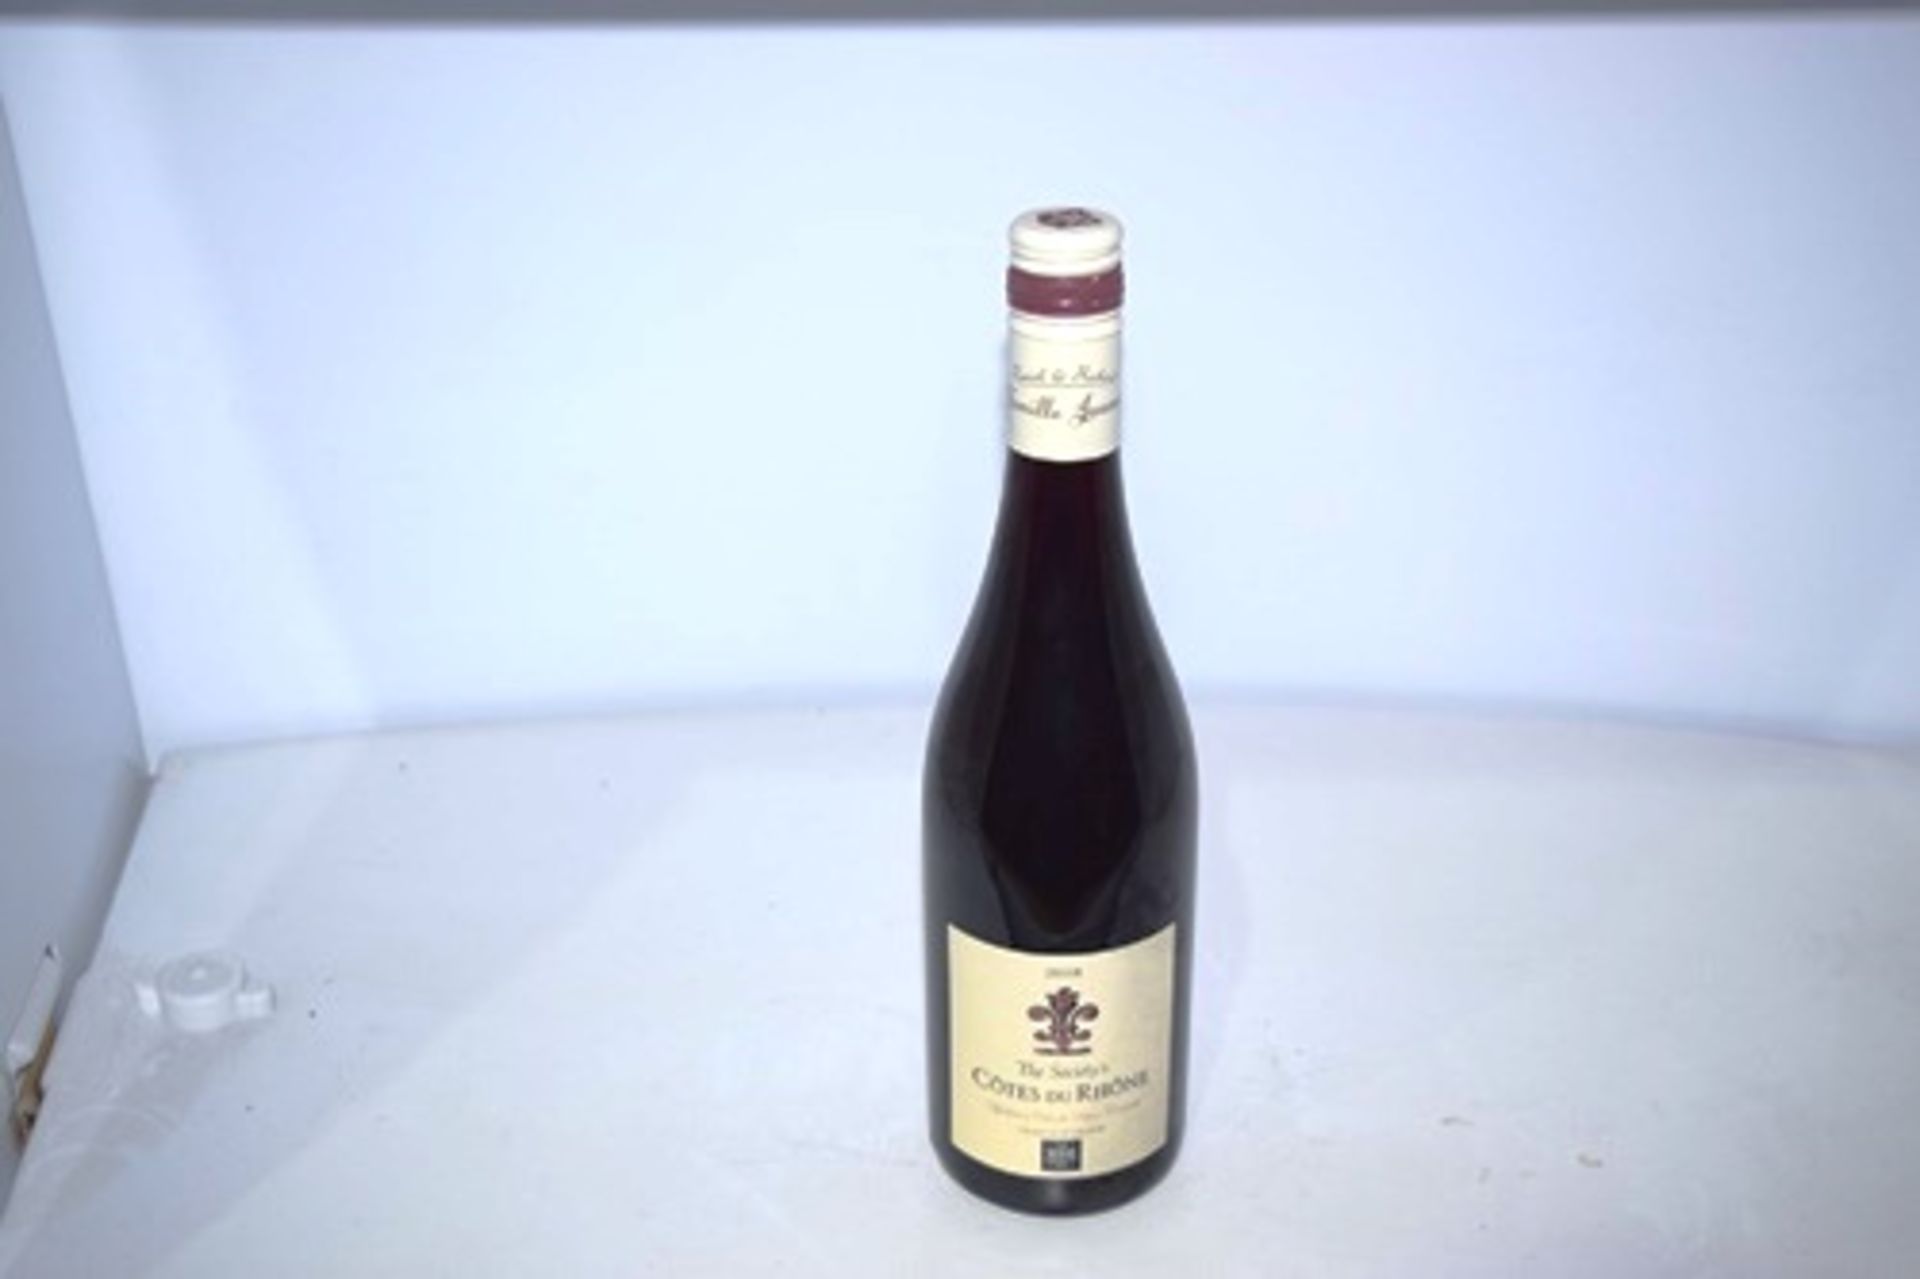 12 x 75cl bottles of The Wine Society's Cotes Du Rhone 2018 (12) (ES14)